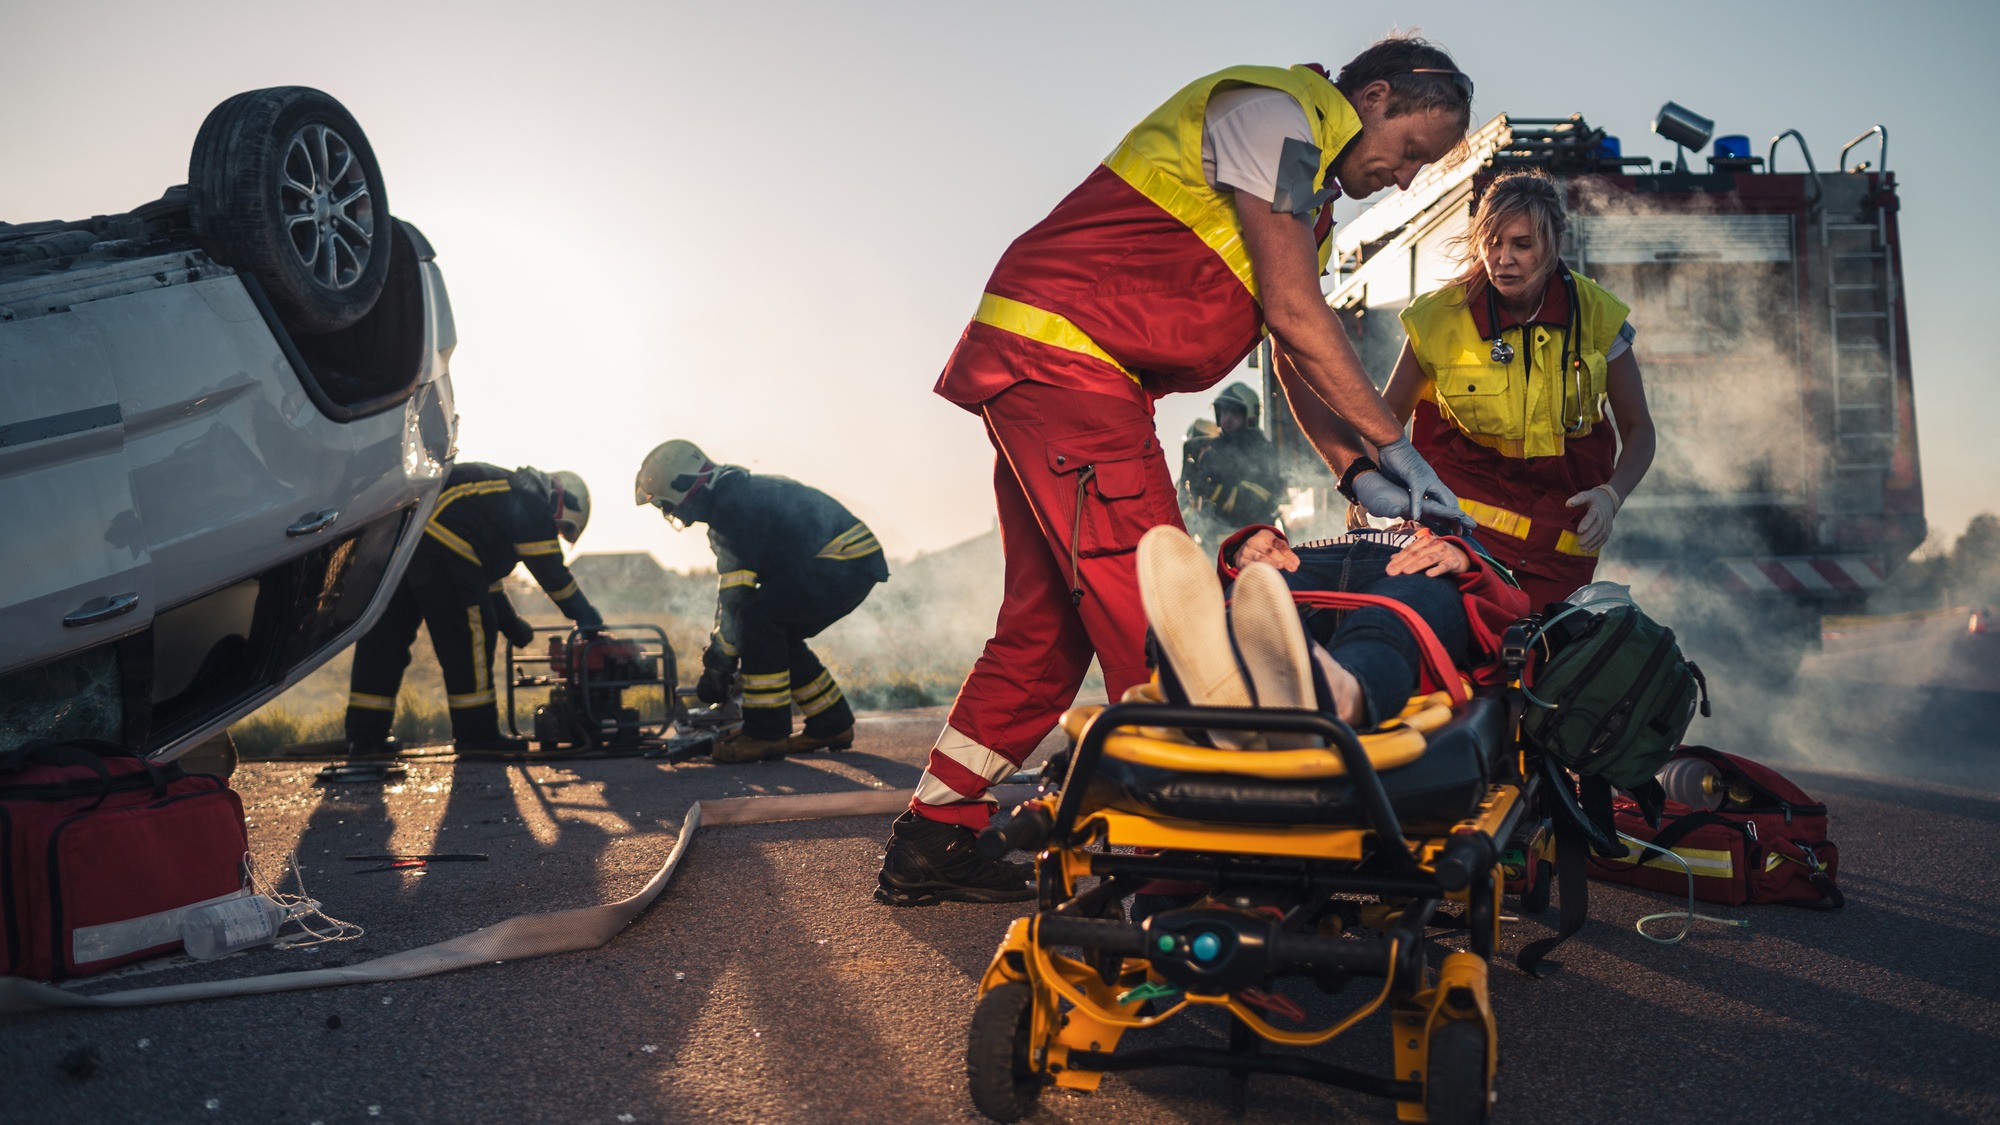 On the Car Crash Traffic Accident Scene: Paramedics Saving Life